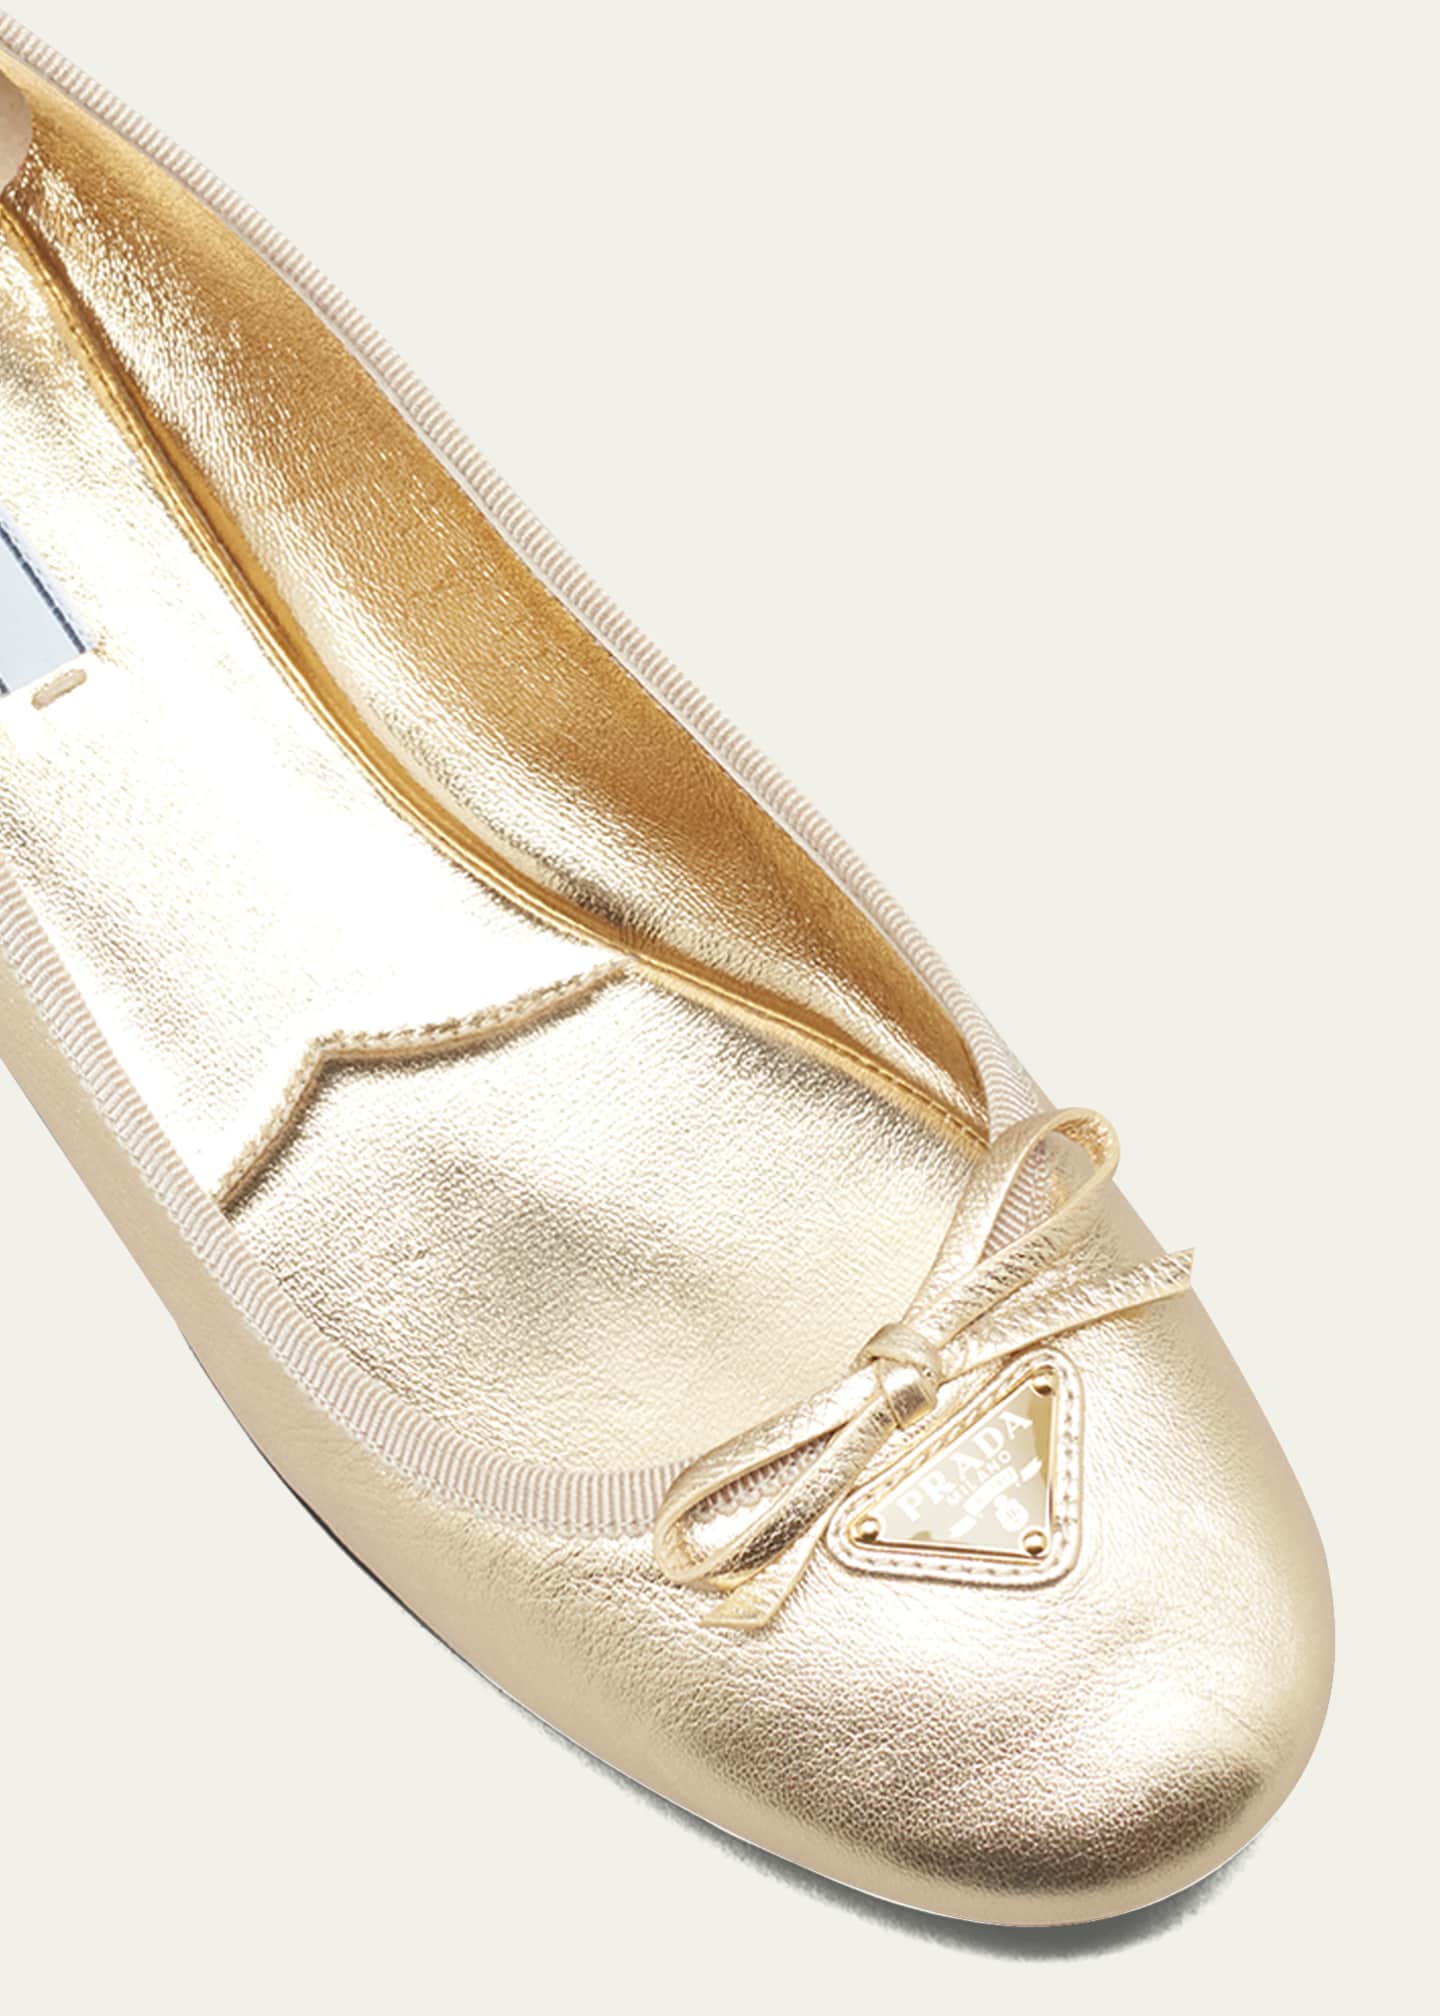 Prada Metallic Bow Ballerina Flats - Bergdorf Goodman